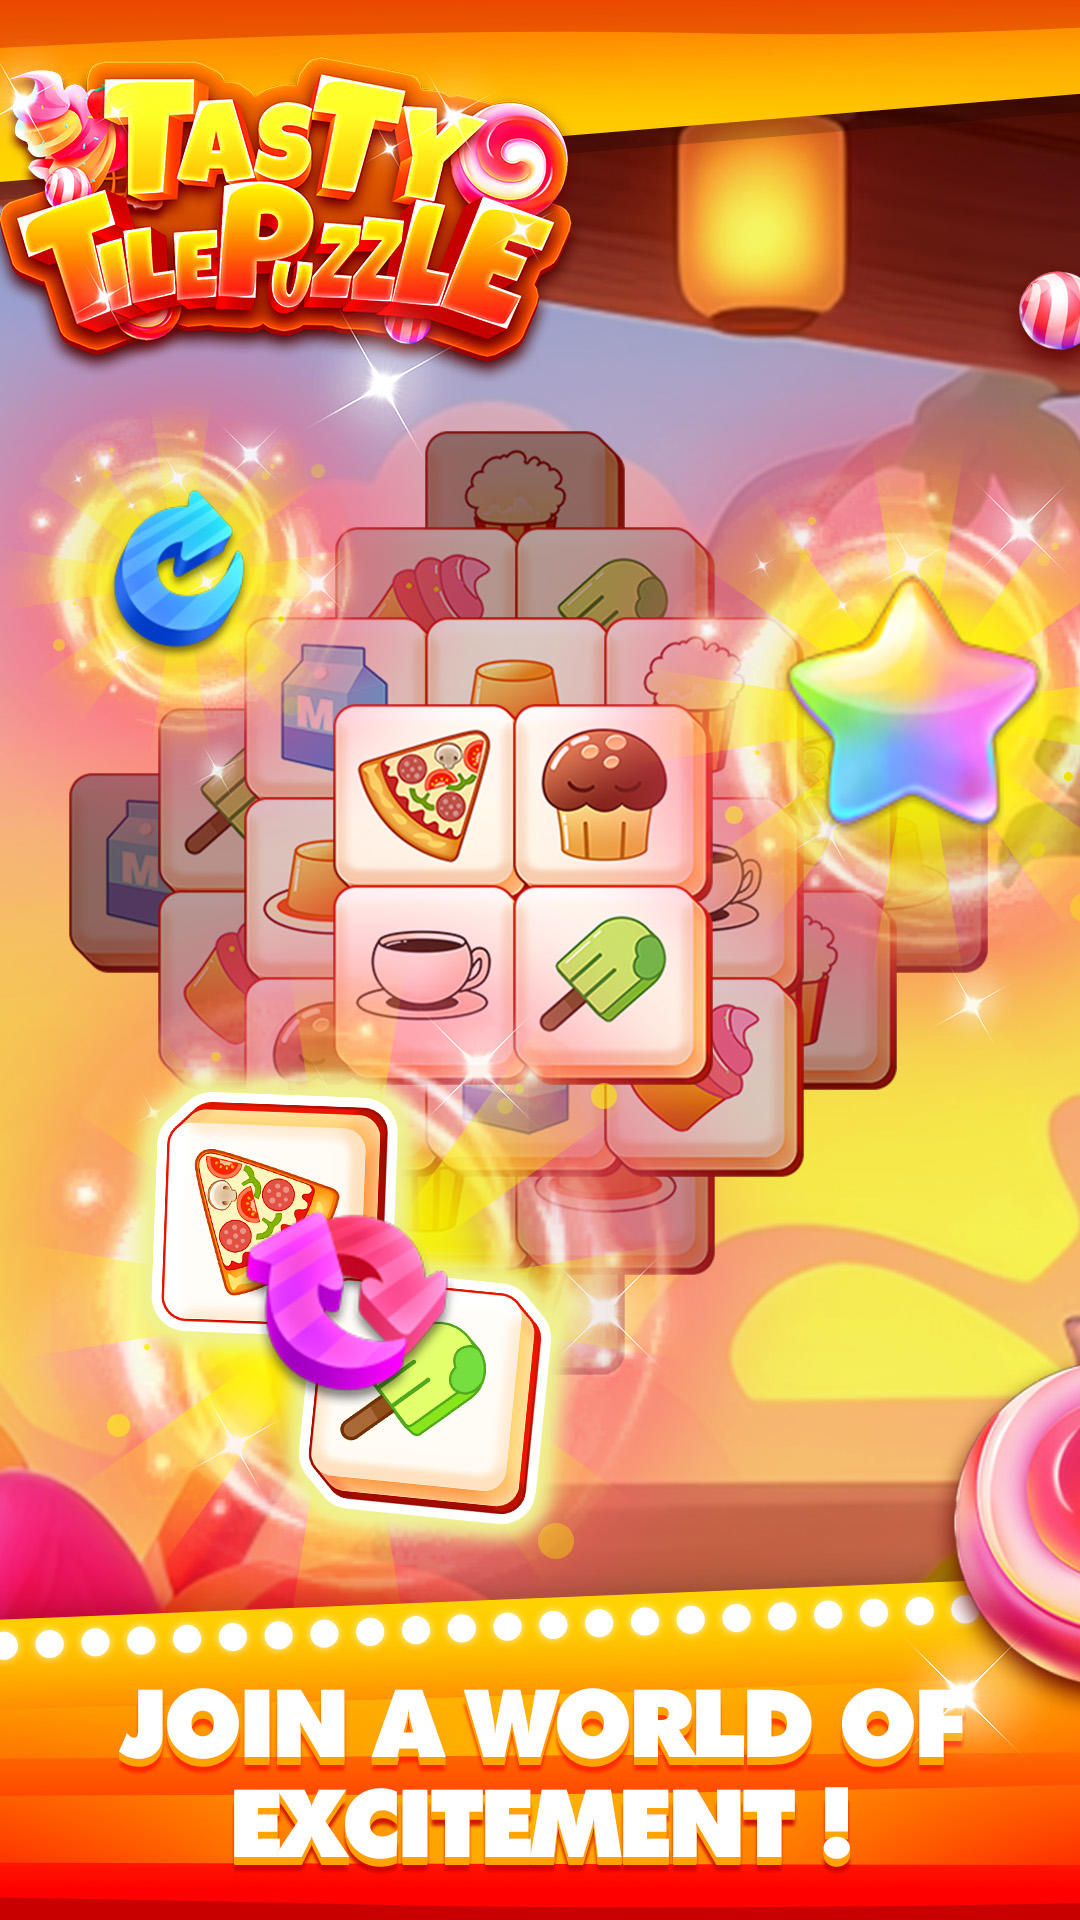 Screenshot of Tasty Tile Puzzle